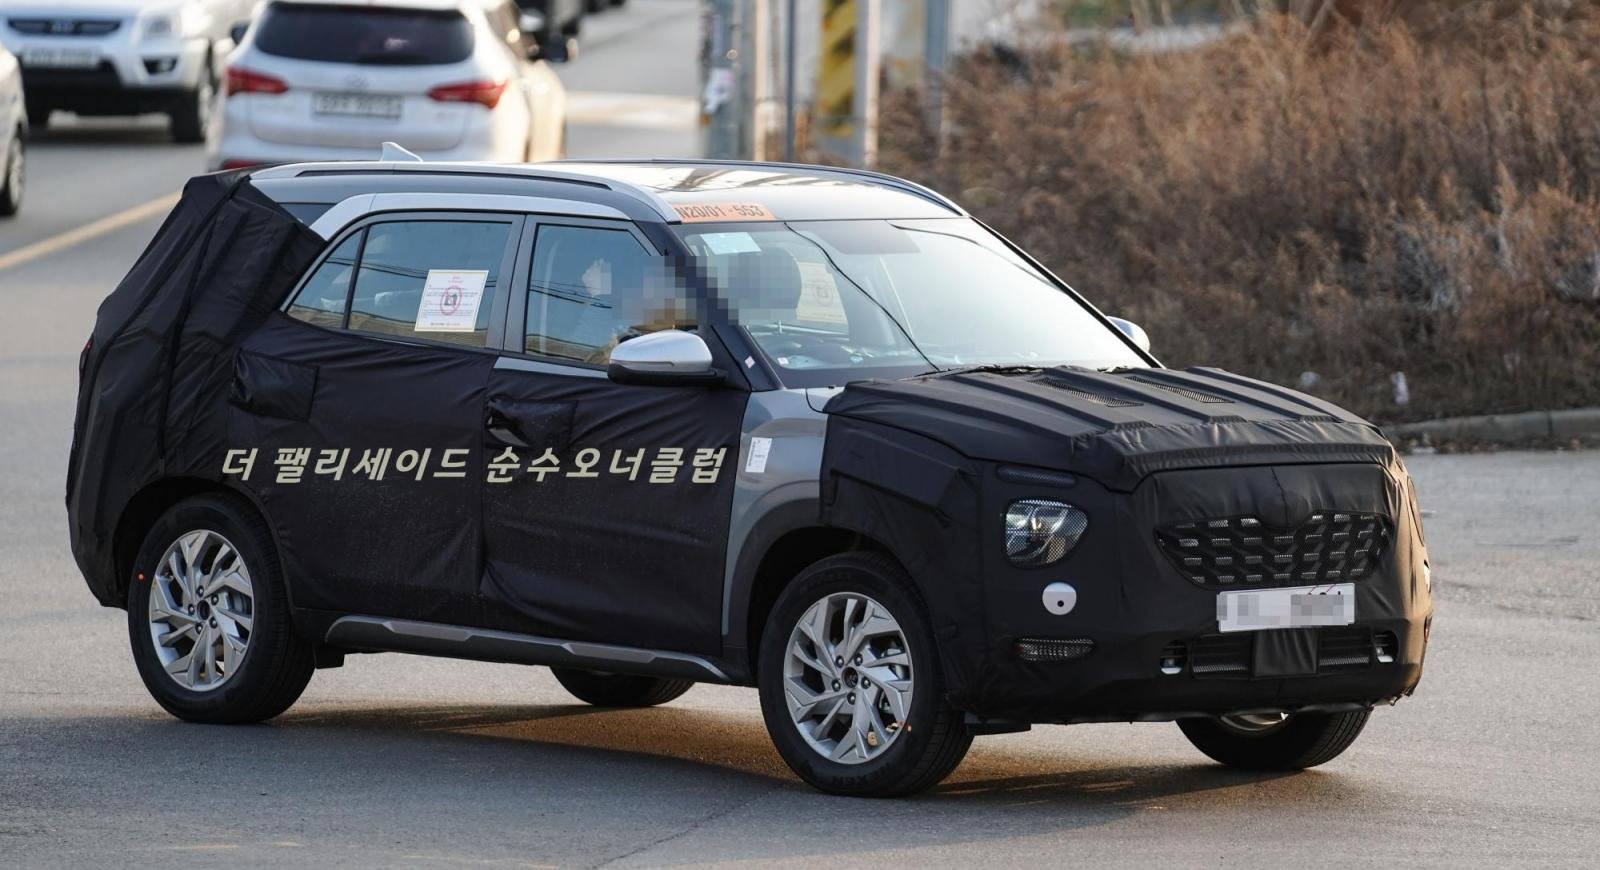 XL-size Hyundai Creta (7-seater Model) Makes Spy Pic Debut